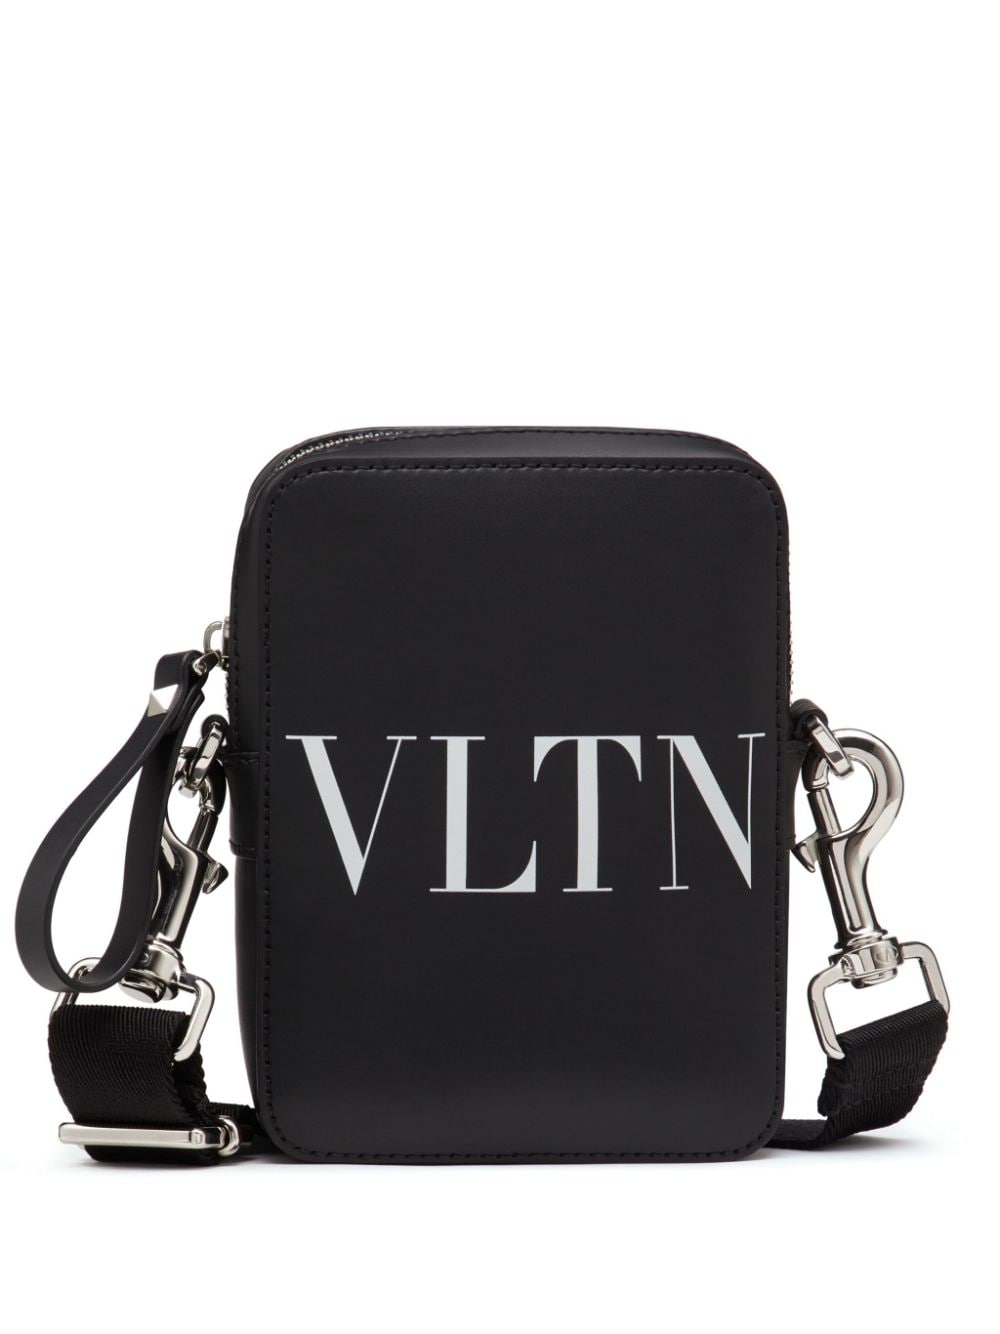 Valentino Bags Special Ross Black Cross-Body Bag